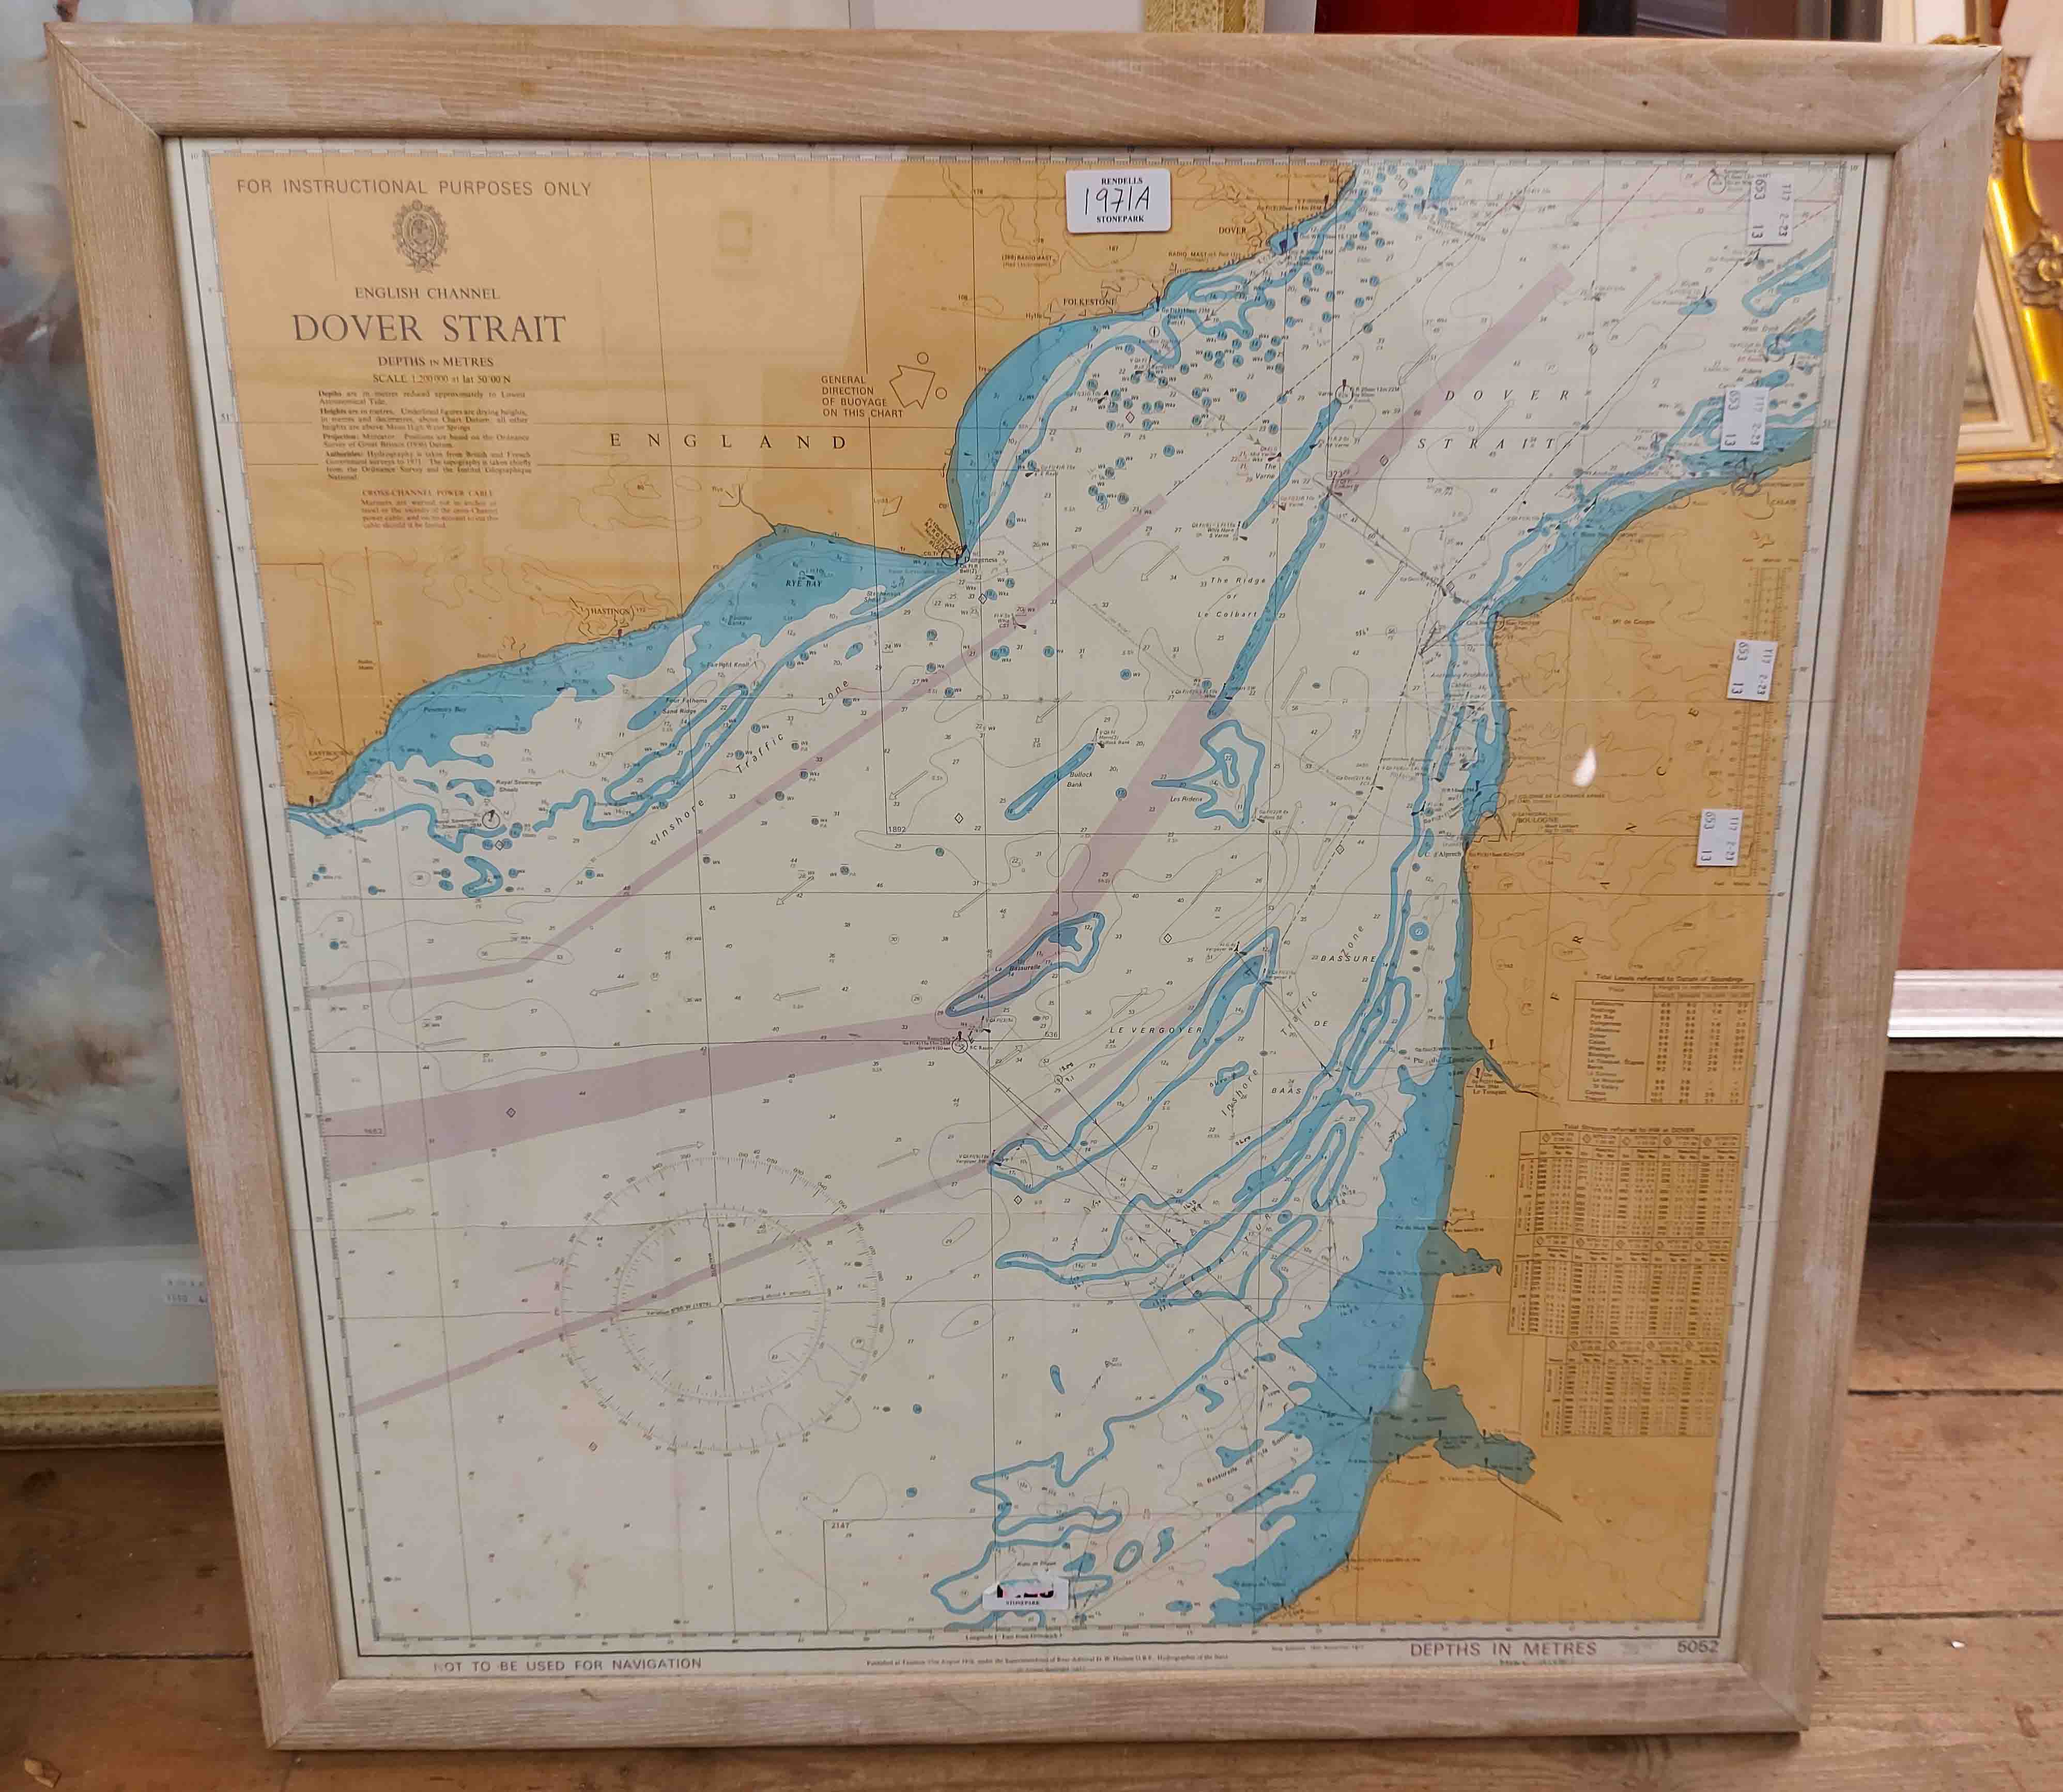 A framed vintage coloured nautical navigation map of Dover Strait - 'under supervision of D.W.